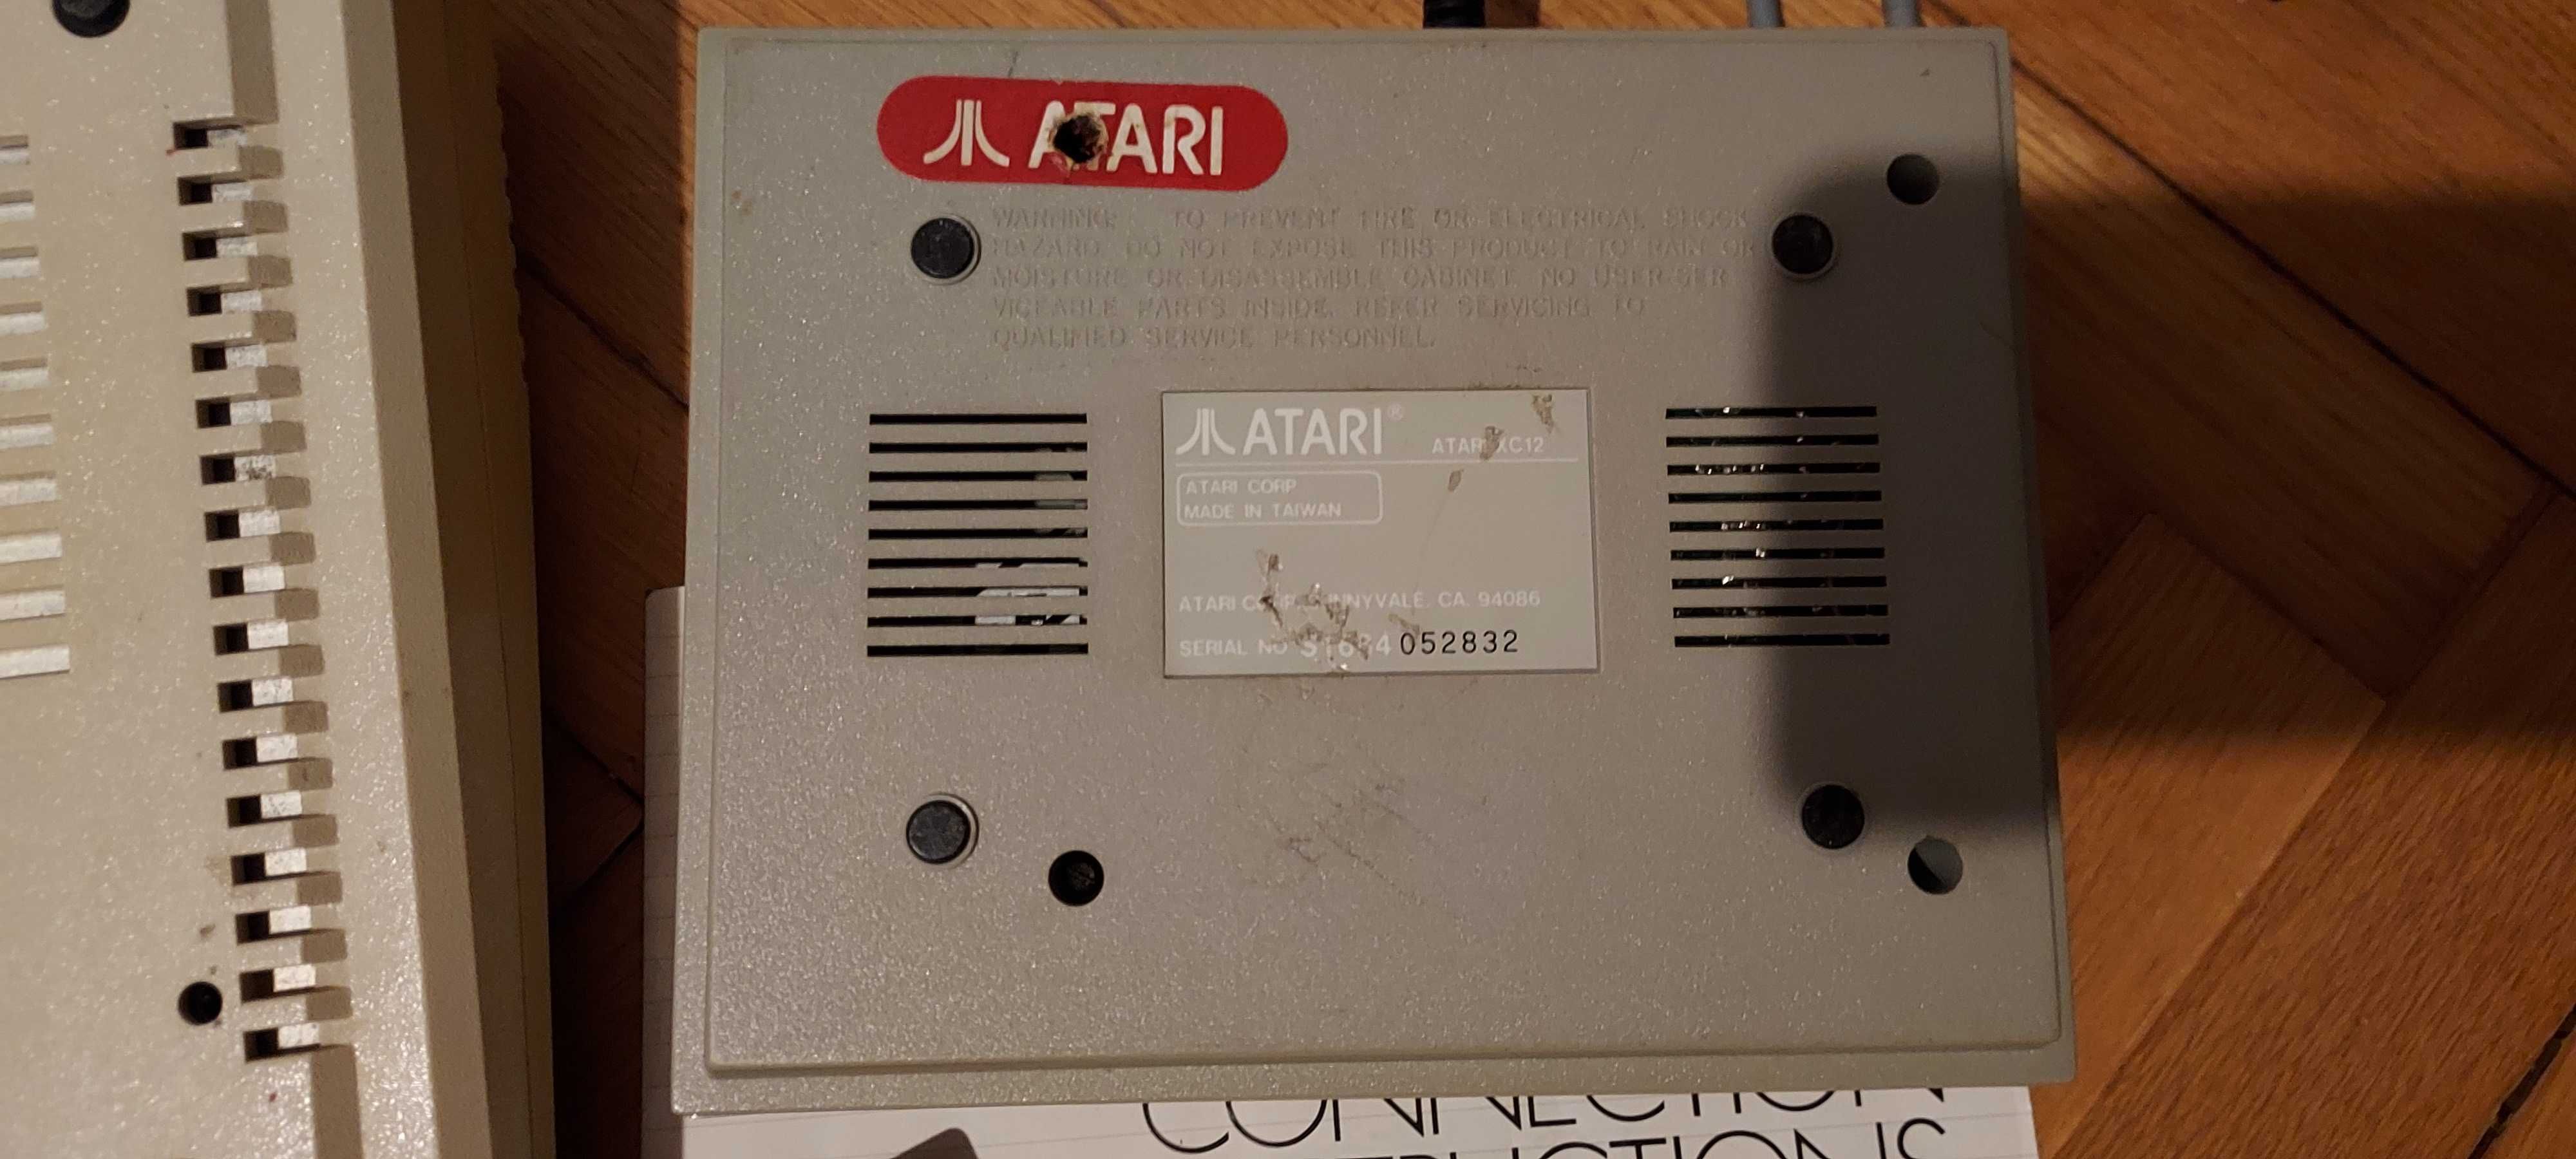 Atari 800xl komplet  z magnetofonem i joystick